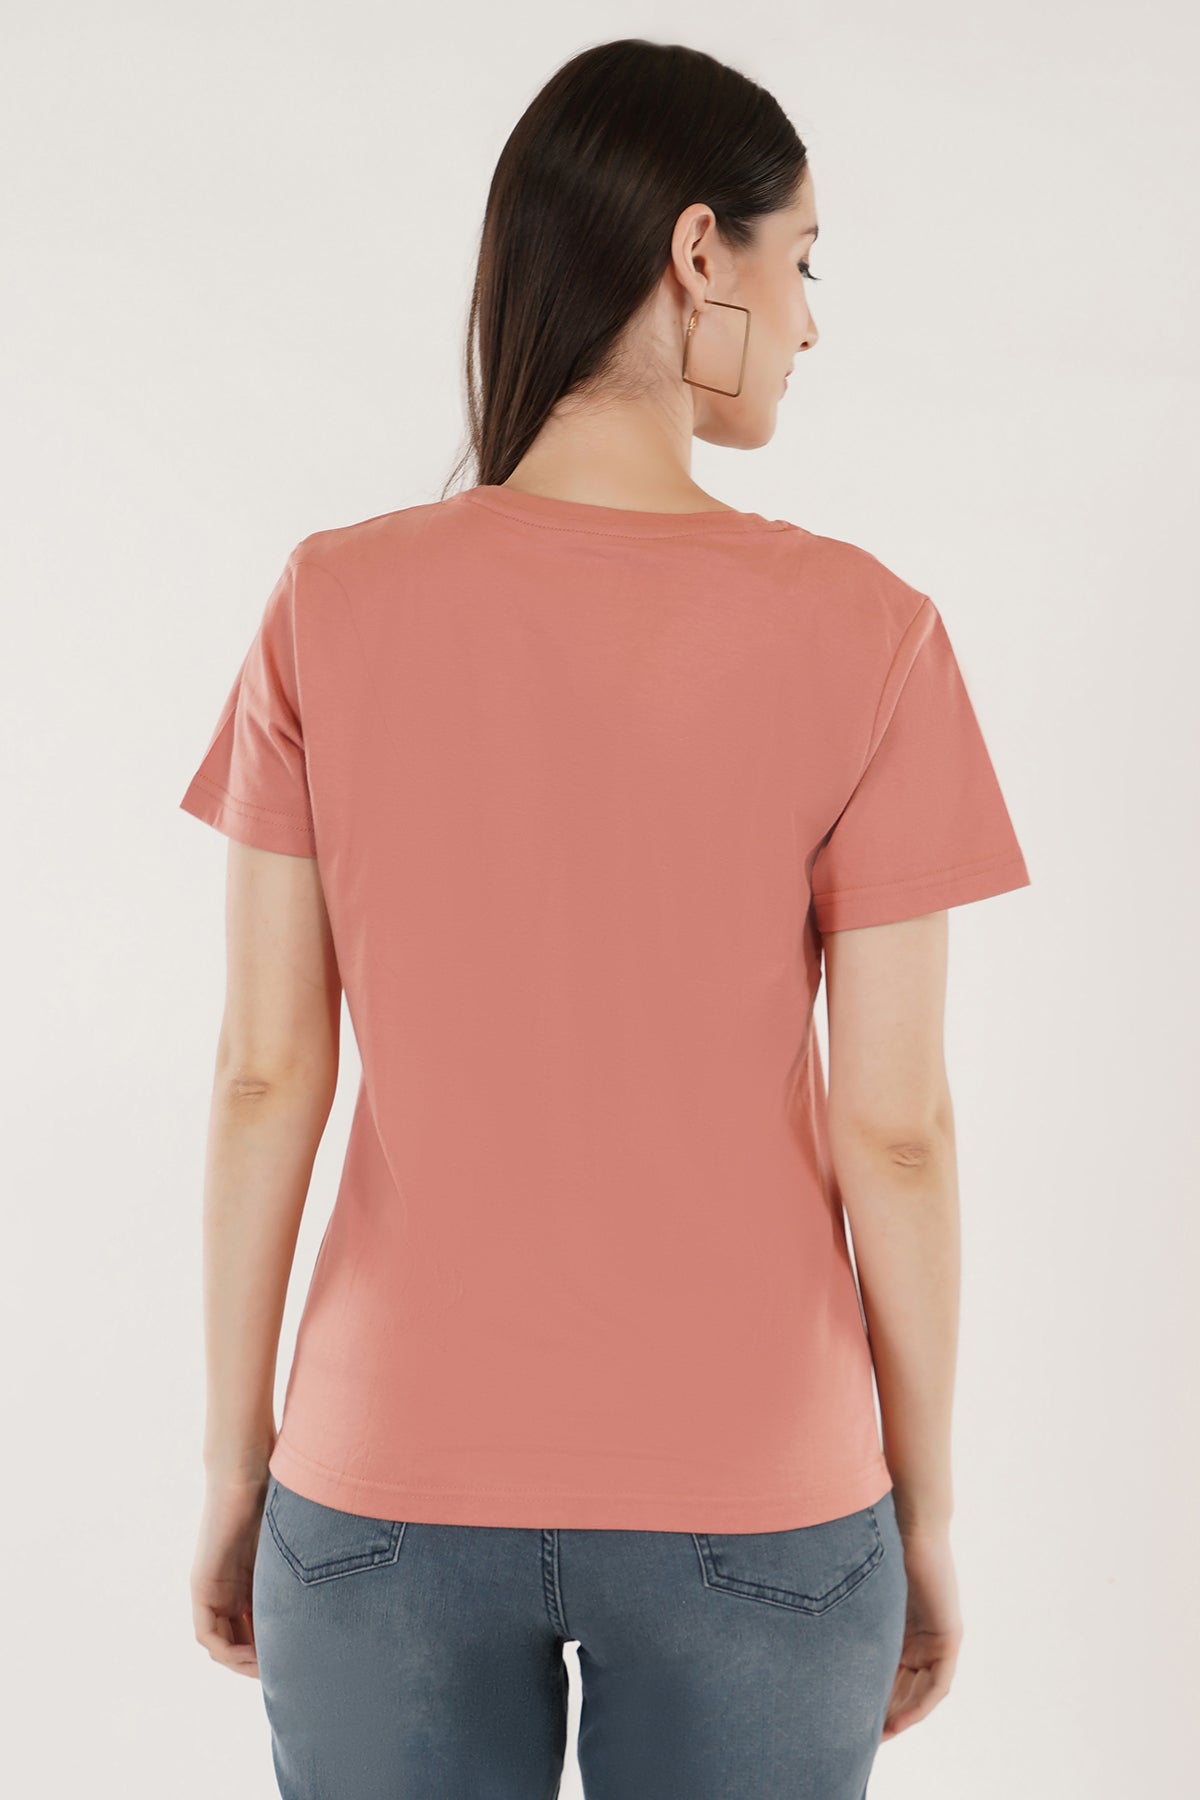 Women Round Neck Salmon Pink T-Shirt